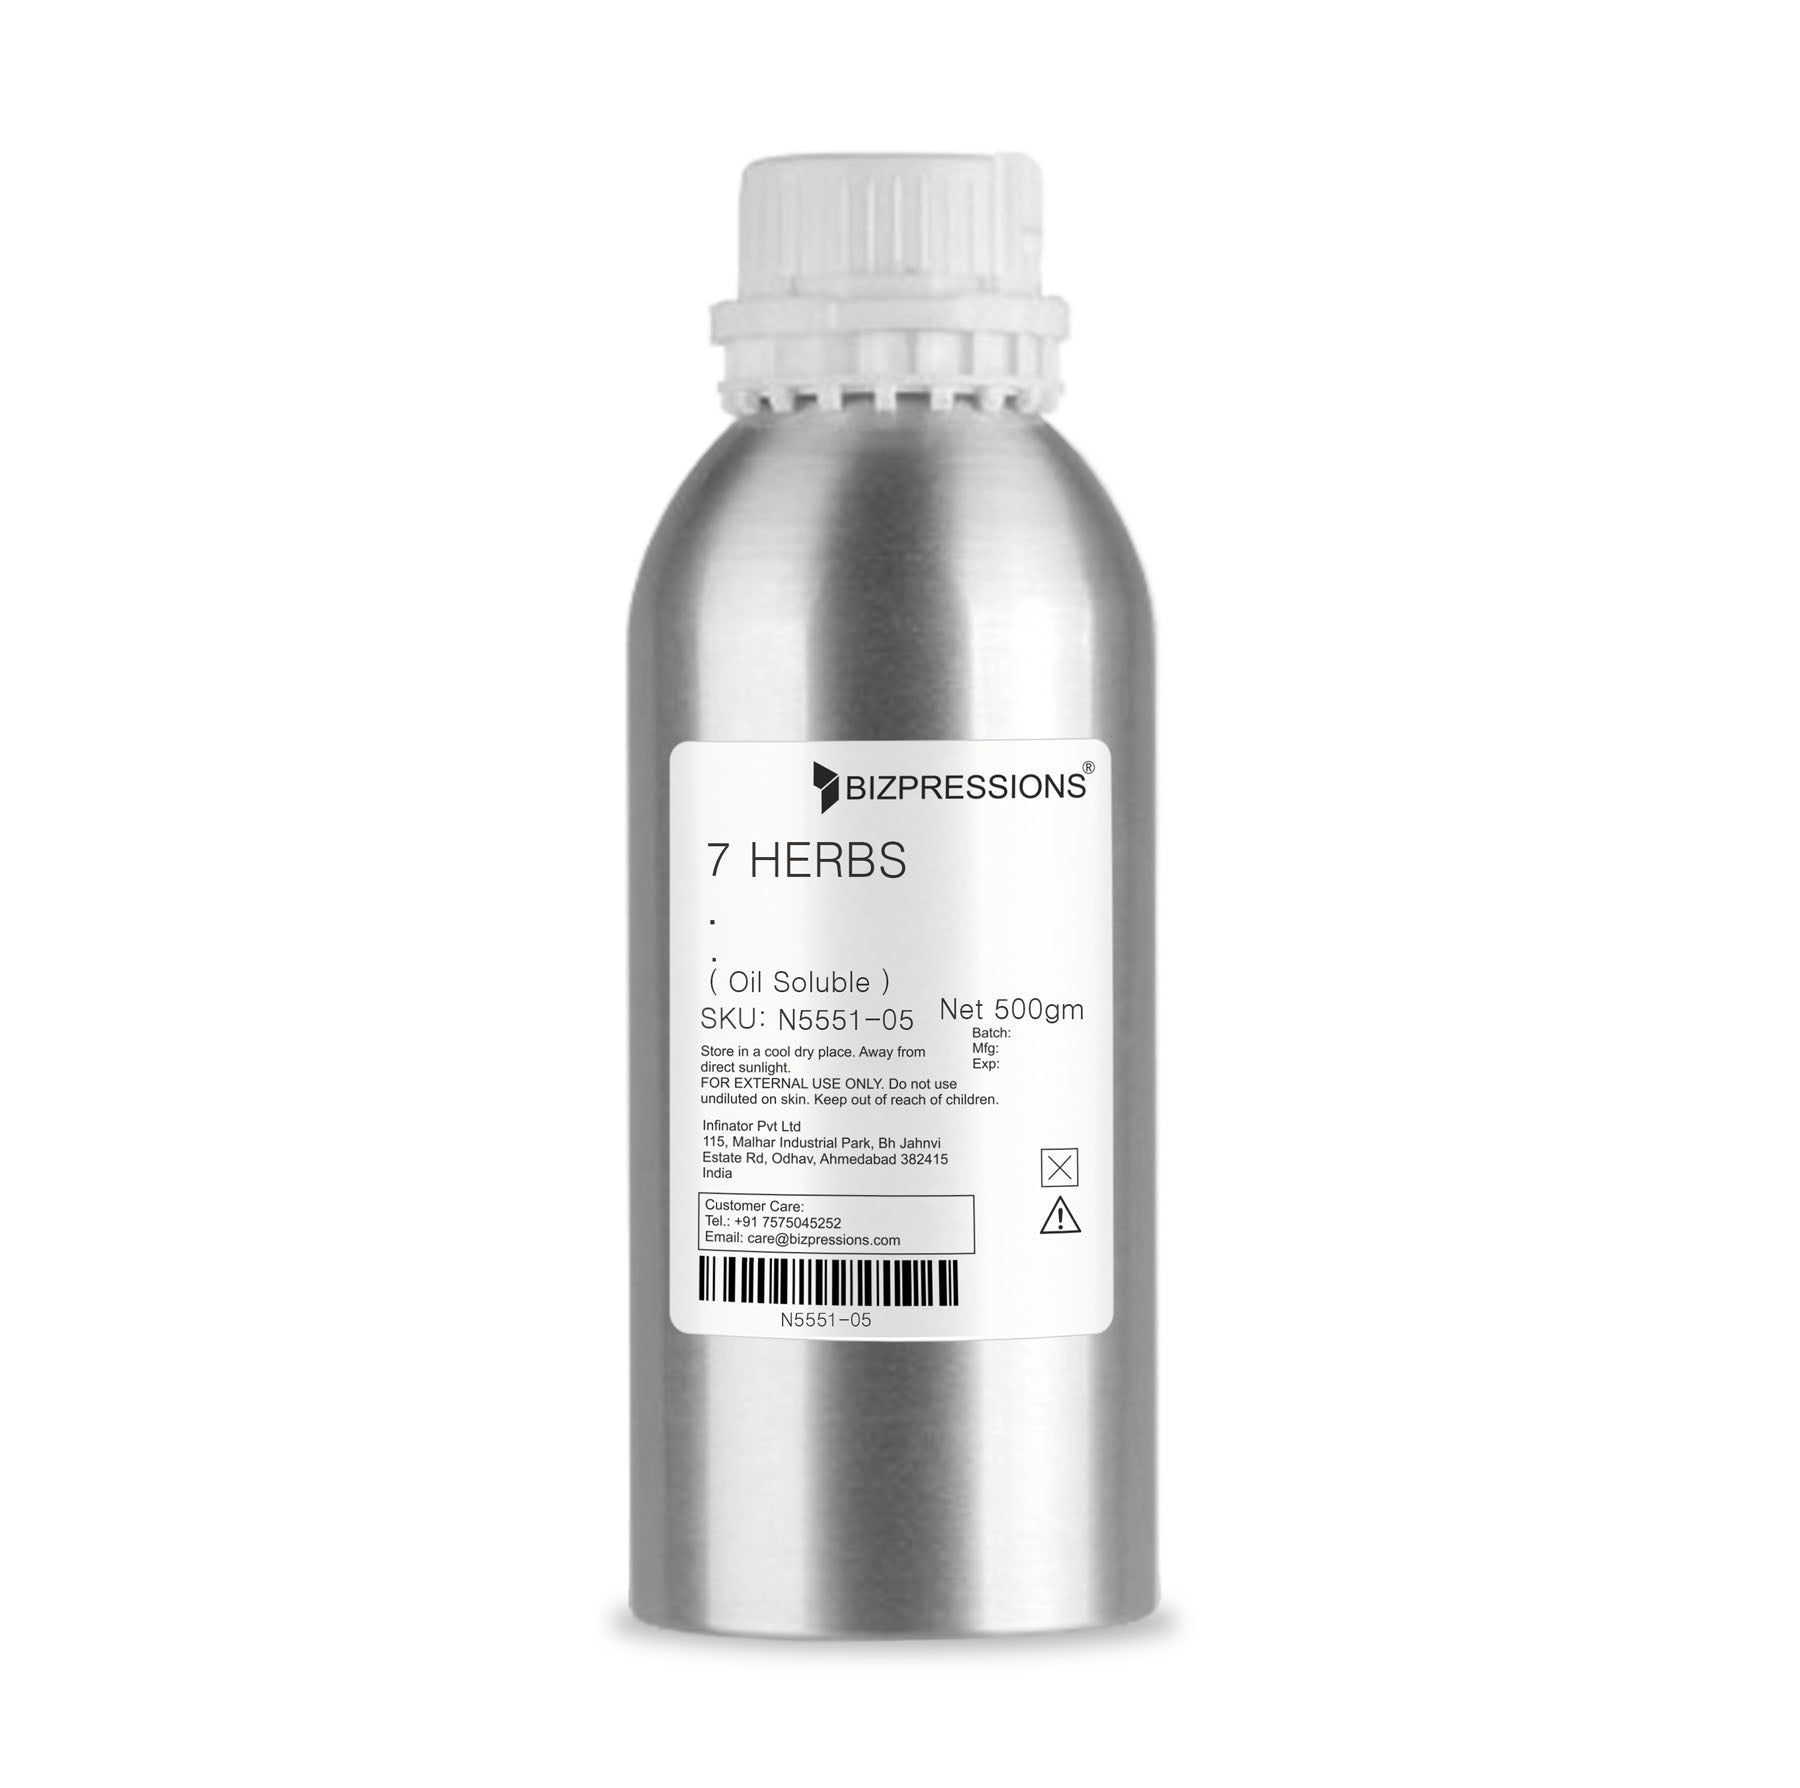 7 HERBS - Fragrance ( Oil Soluble ) - 500 gm